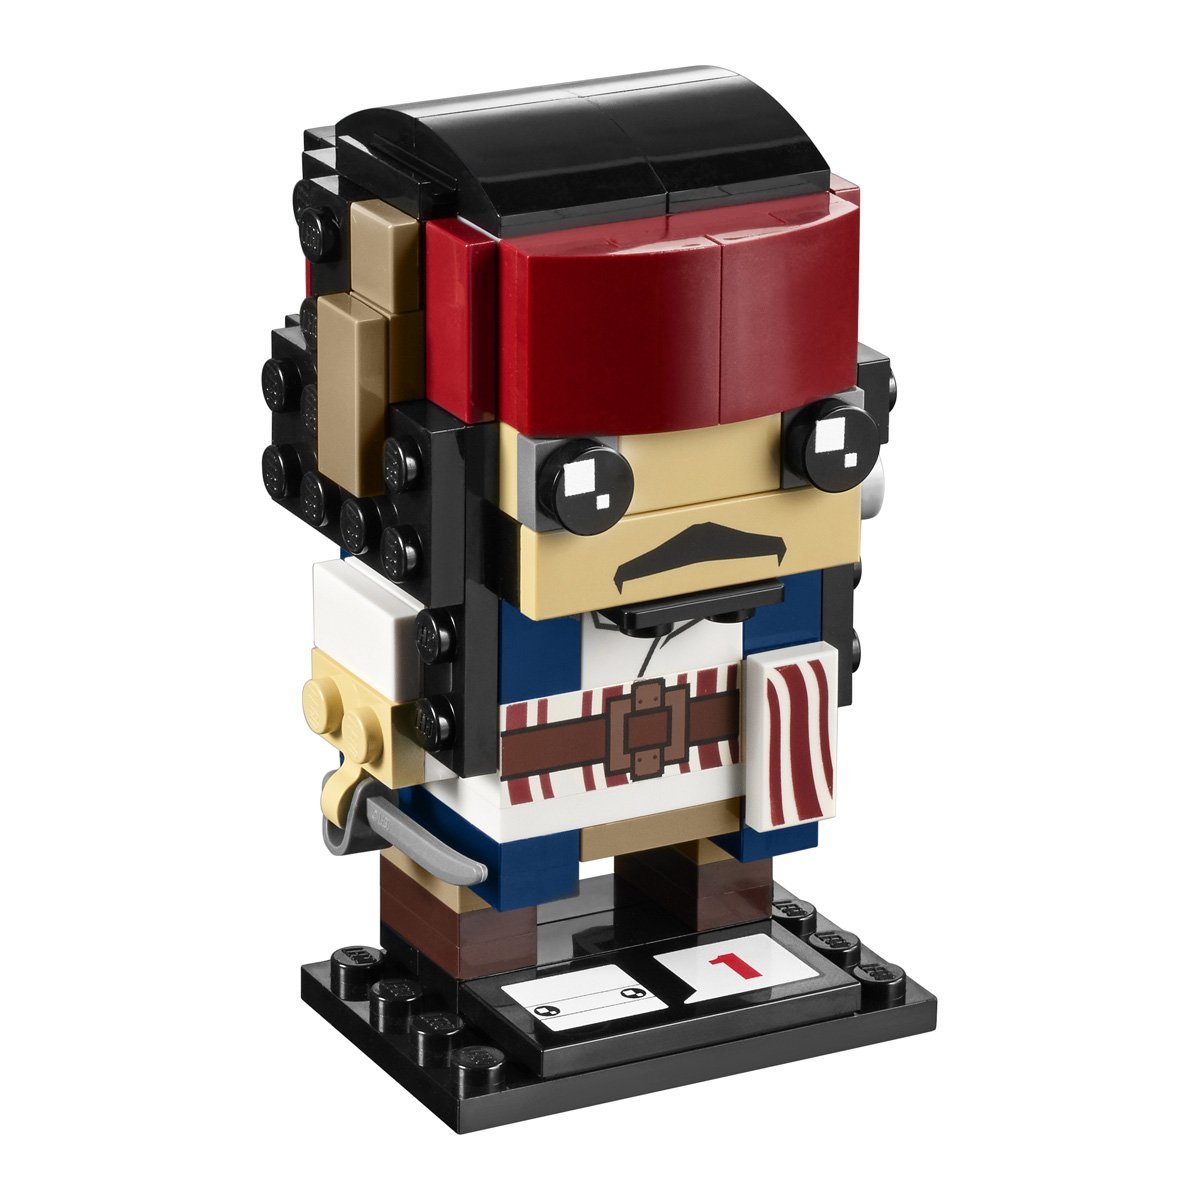 Brickheadz Captain Jack Sparrow Lego